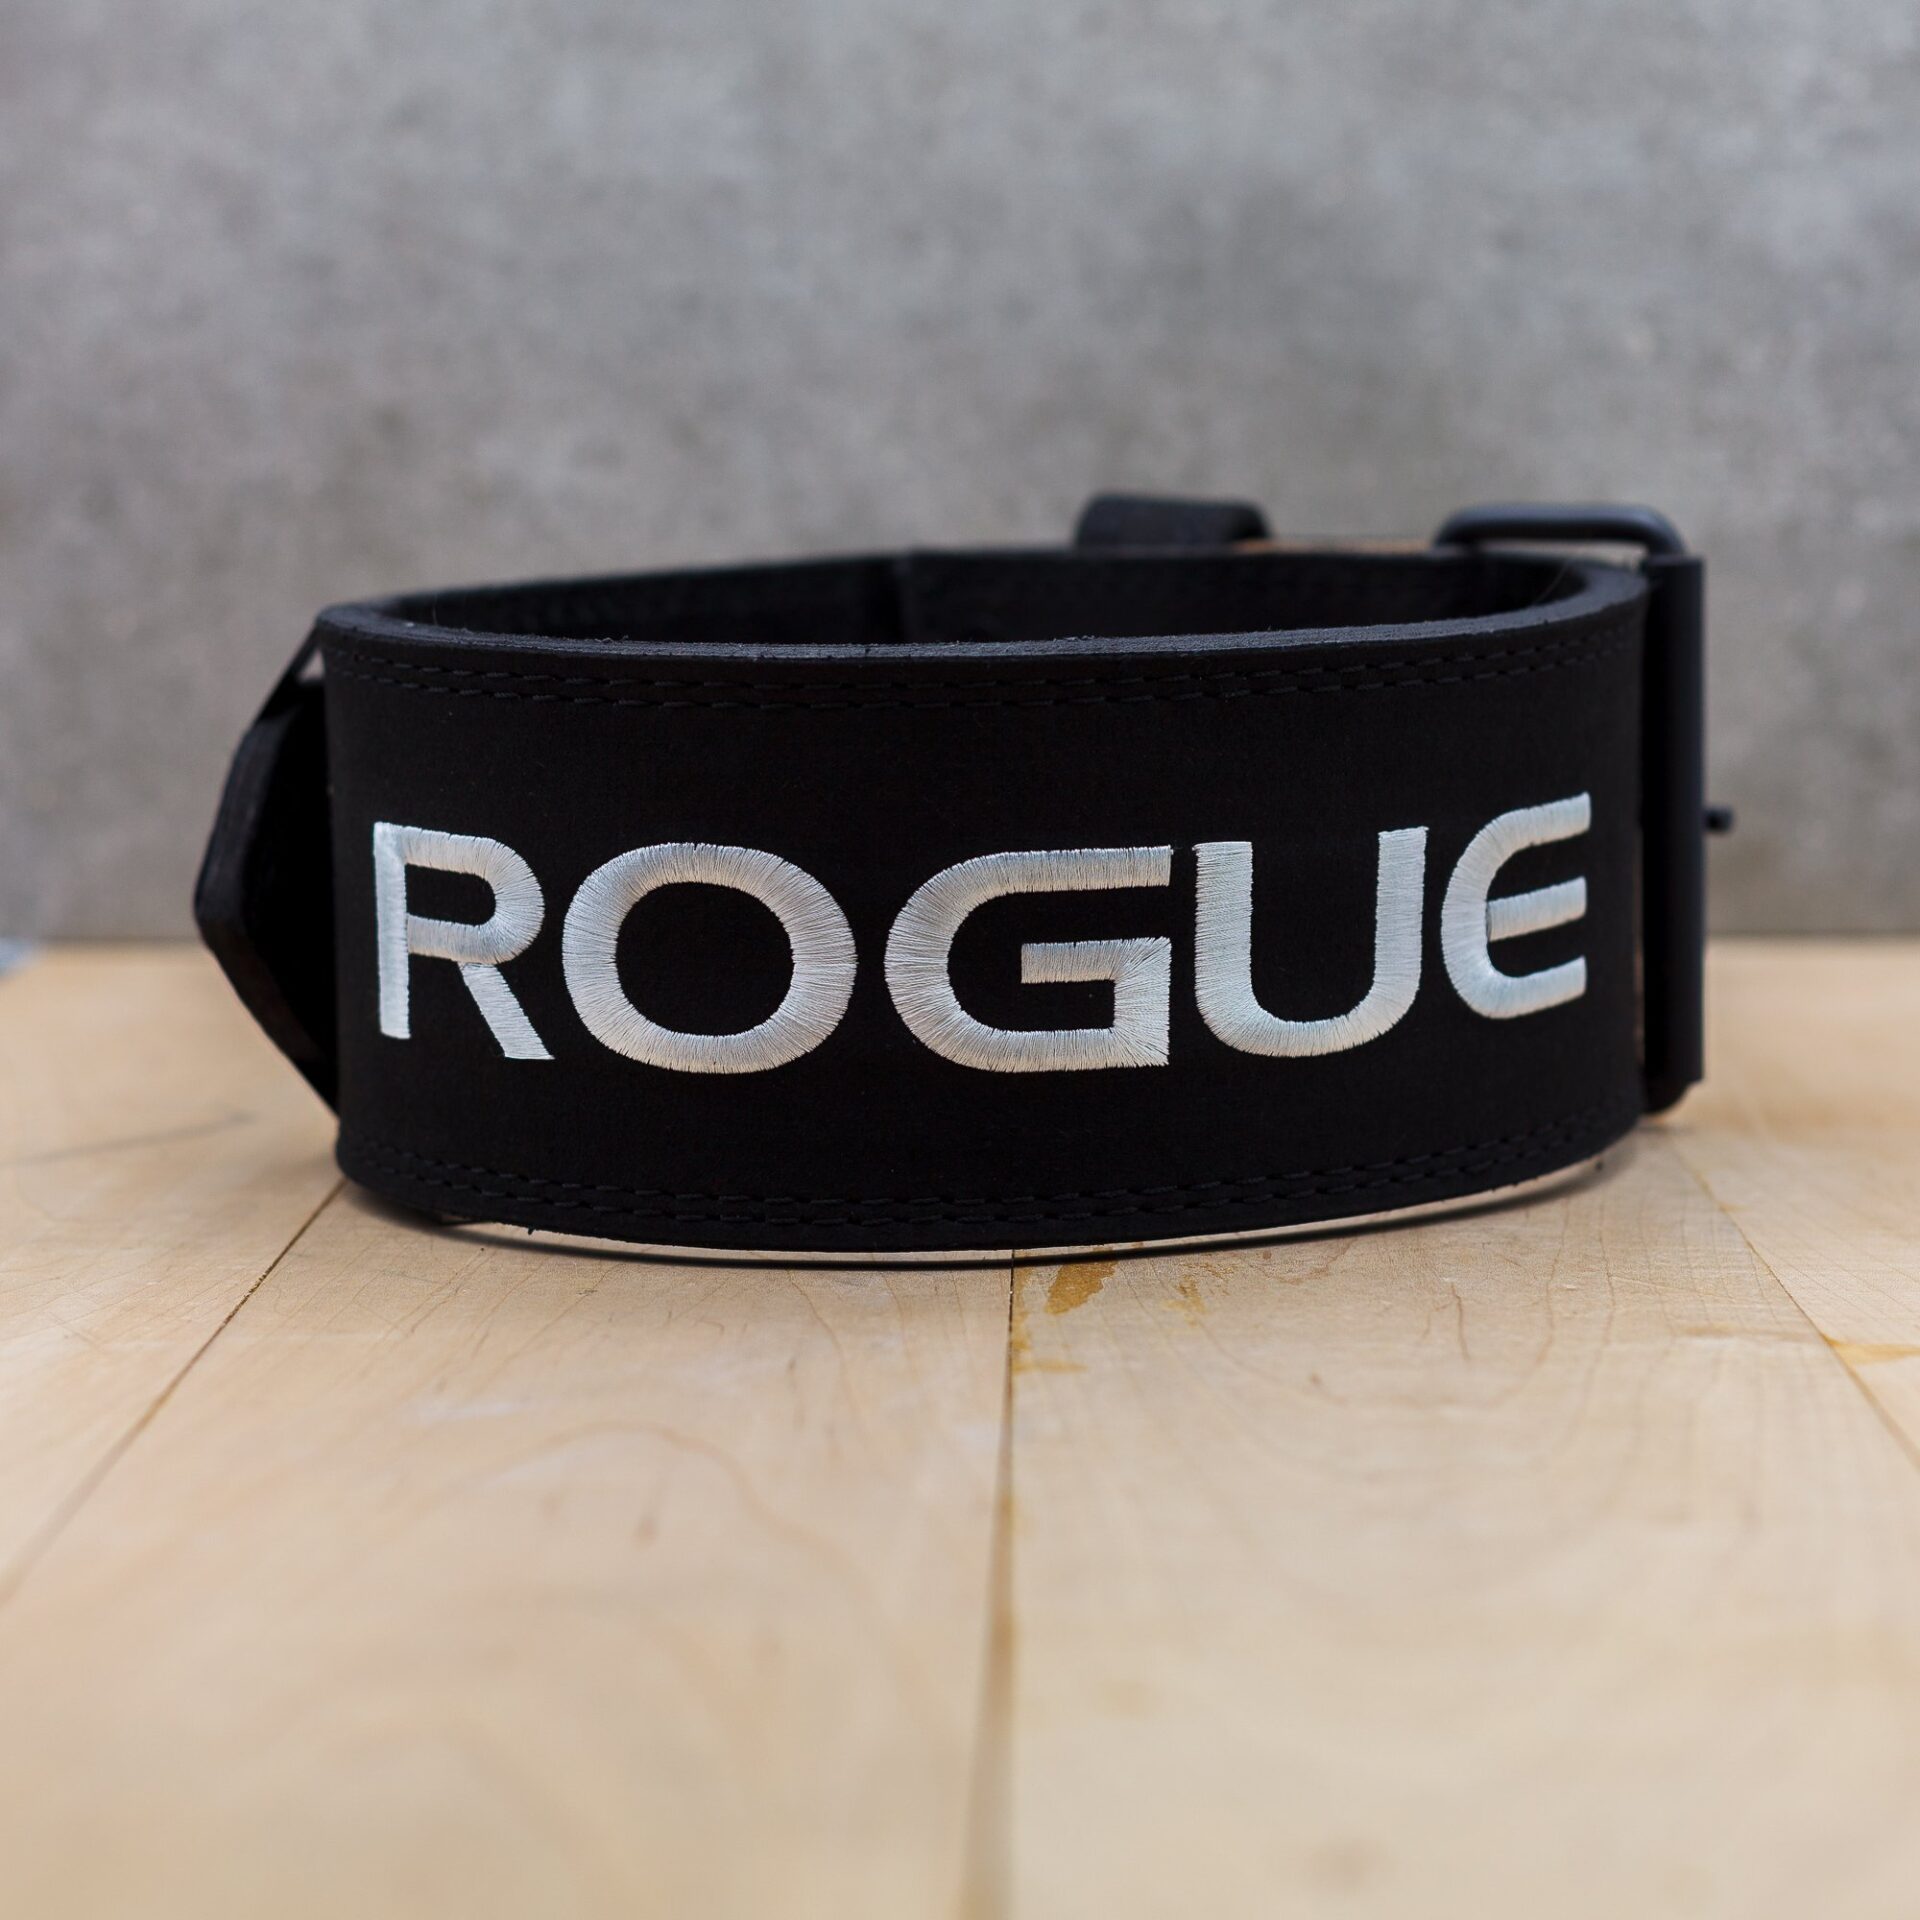 rogue-echo-10mm-lifting-belt-01-2000px_ff1f3914-9468-4156-9aaa-2cc1d500cf92.jpg